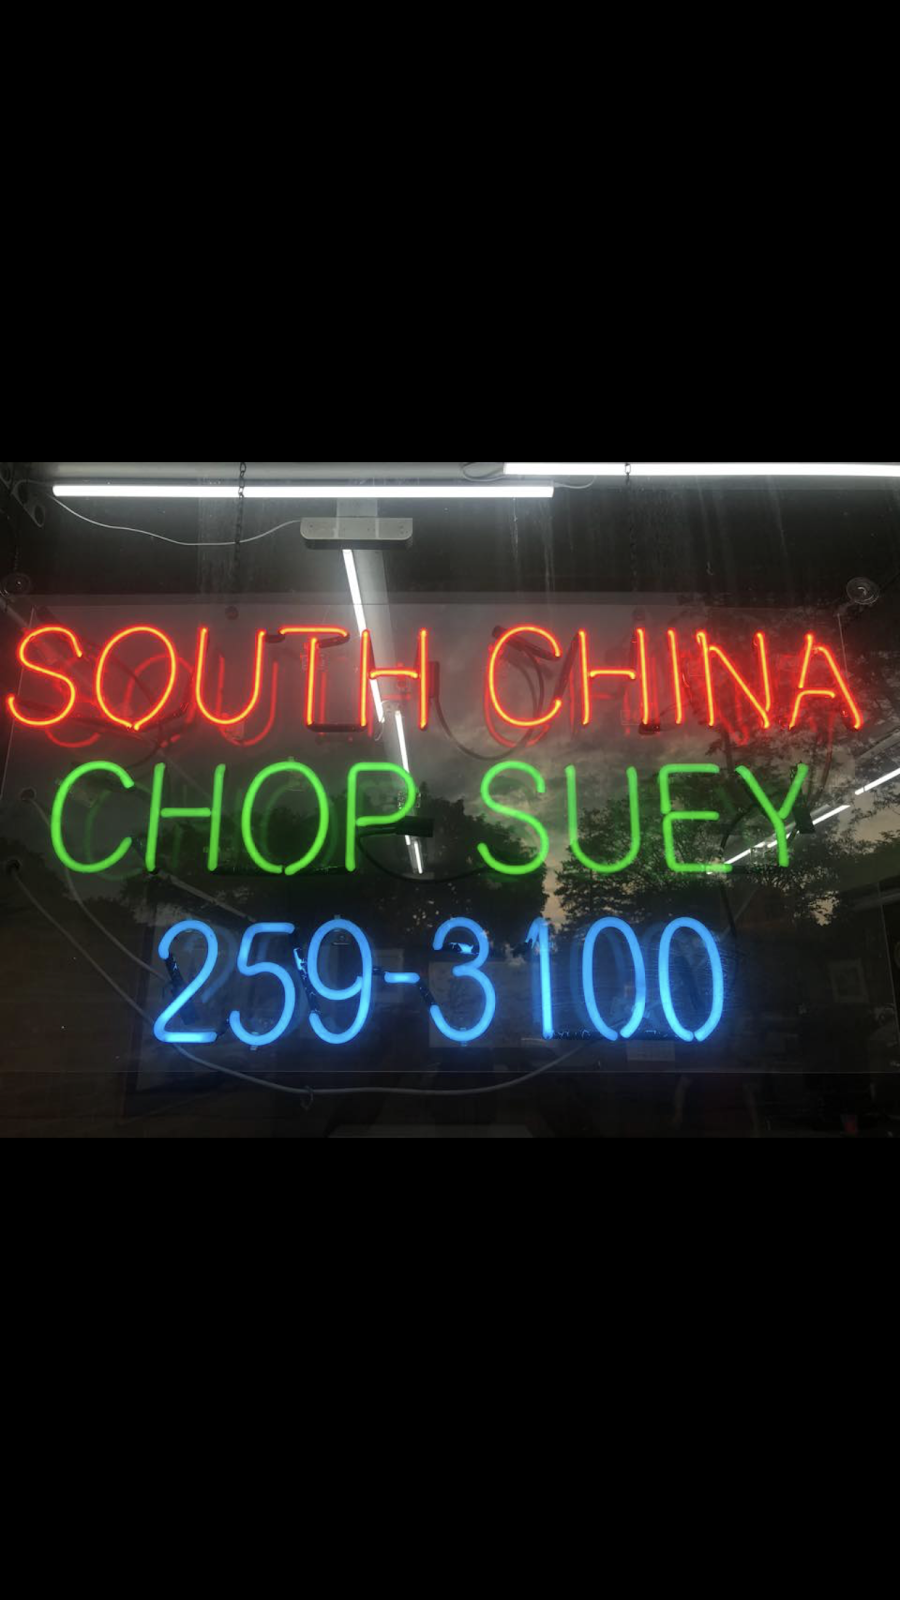 South China Chop Suey | 407 S Arlington Heights Rd, Arlington Heights, IL 60005 | Phone: (847) 259-3100